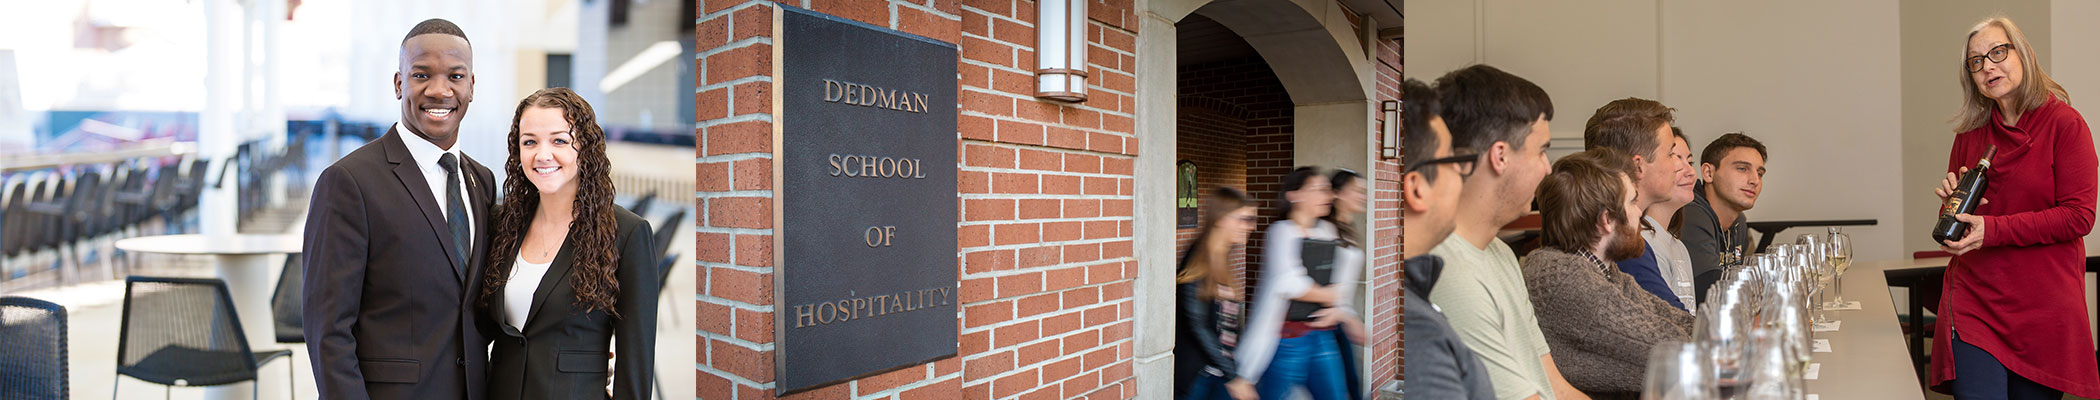 Dedman College of Hospitality Banner Image